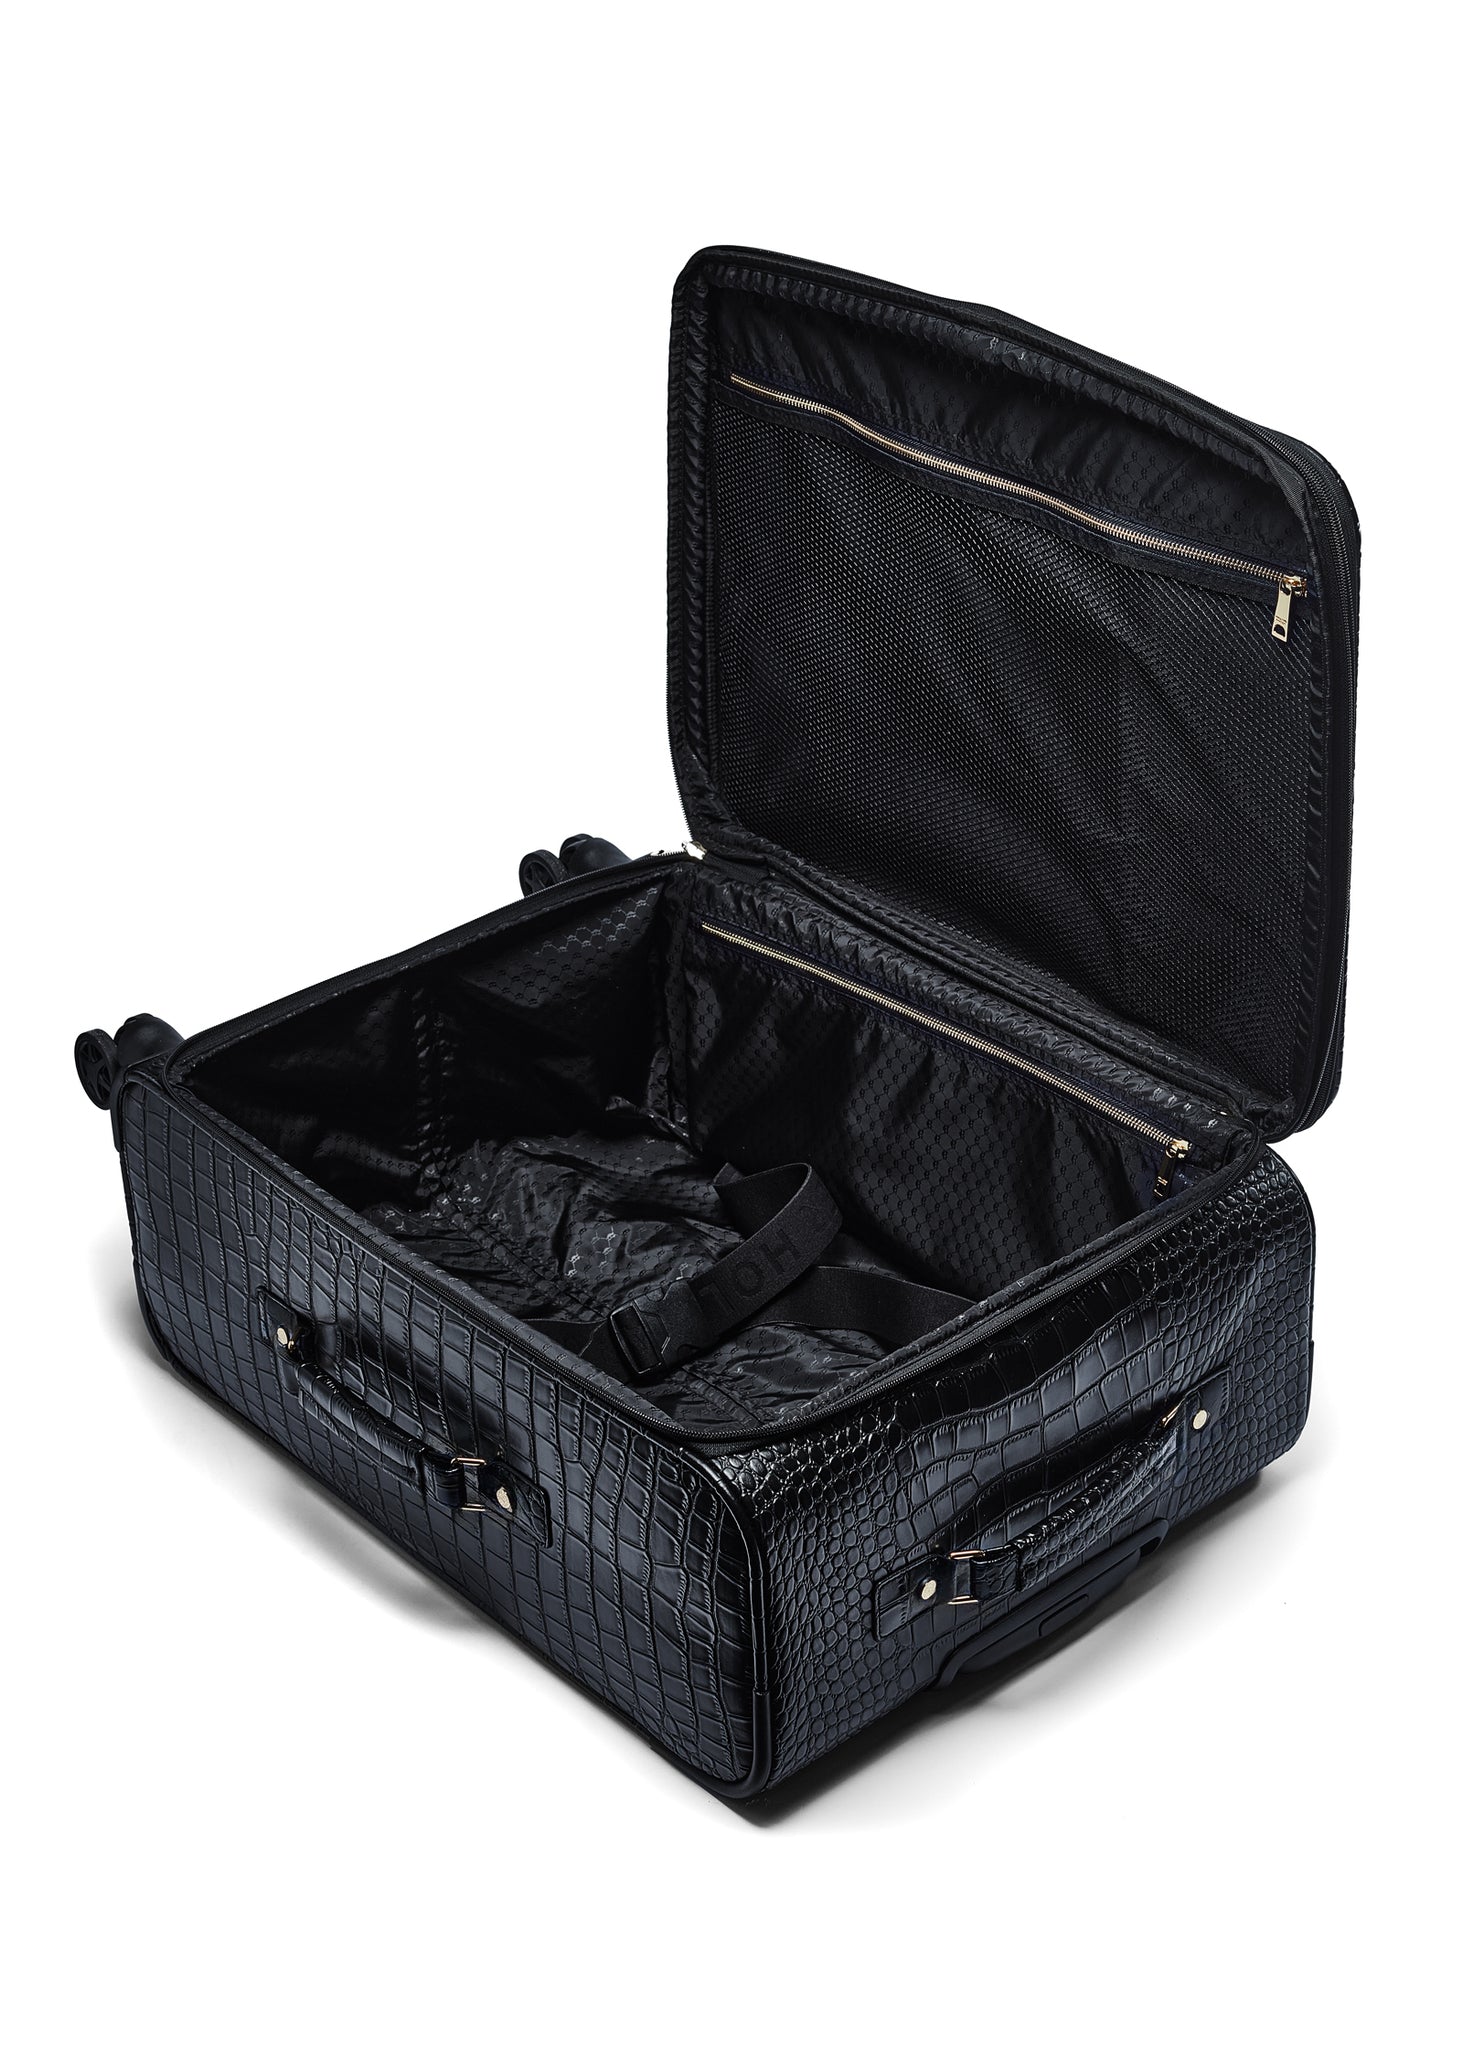 Knightsbridge Large Suitcase (Black Croc)